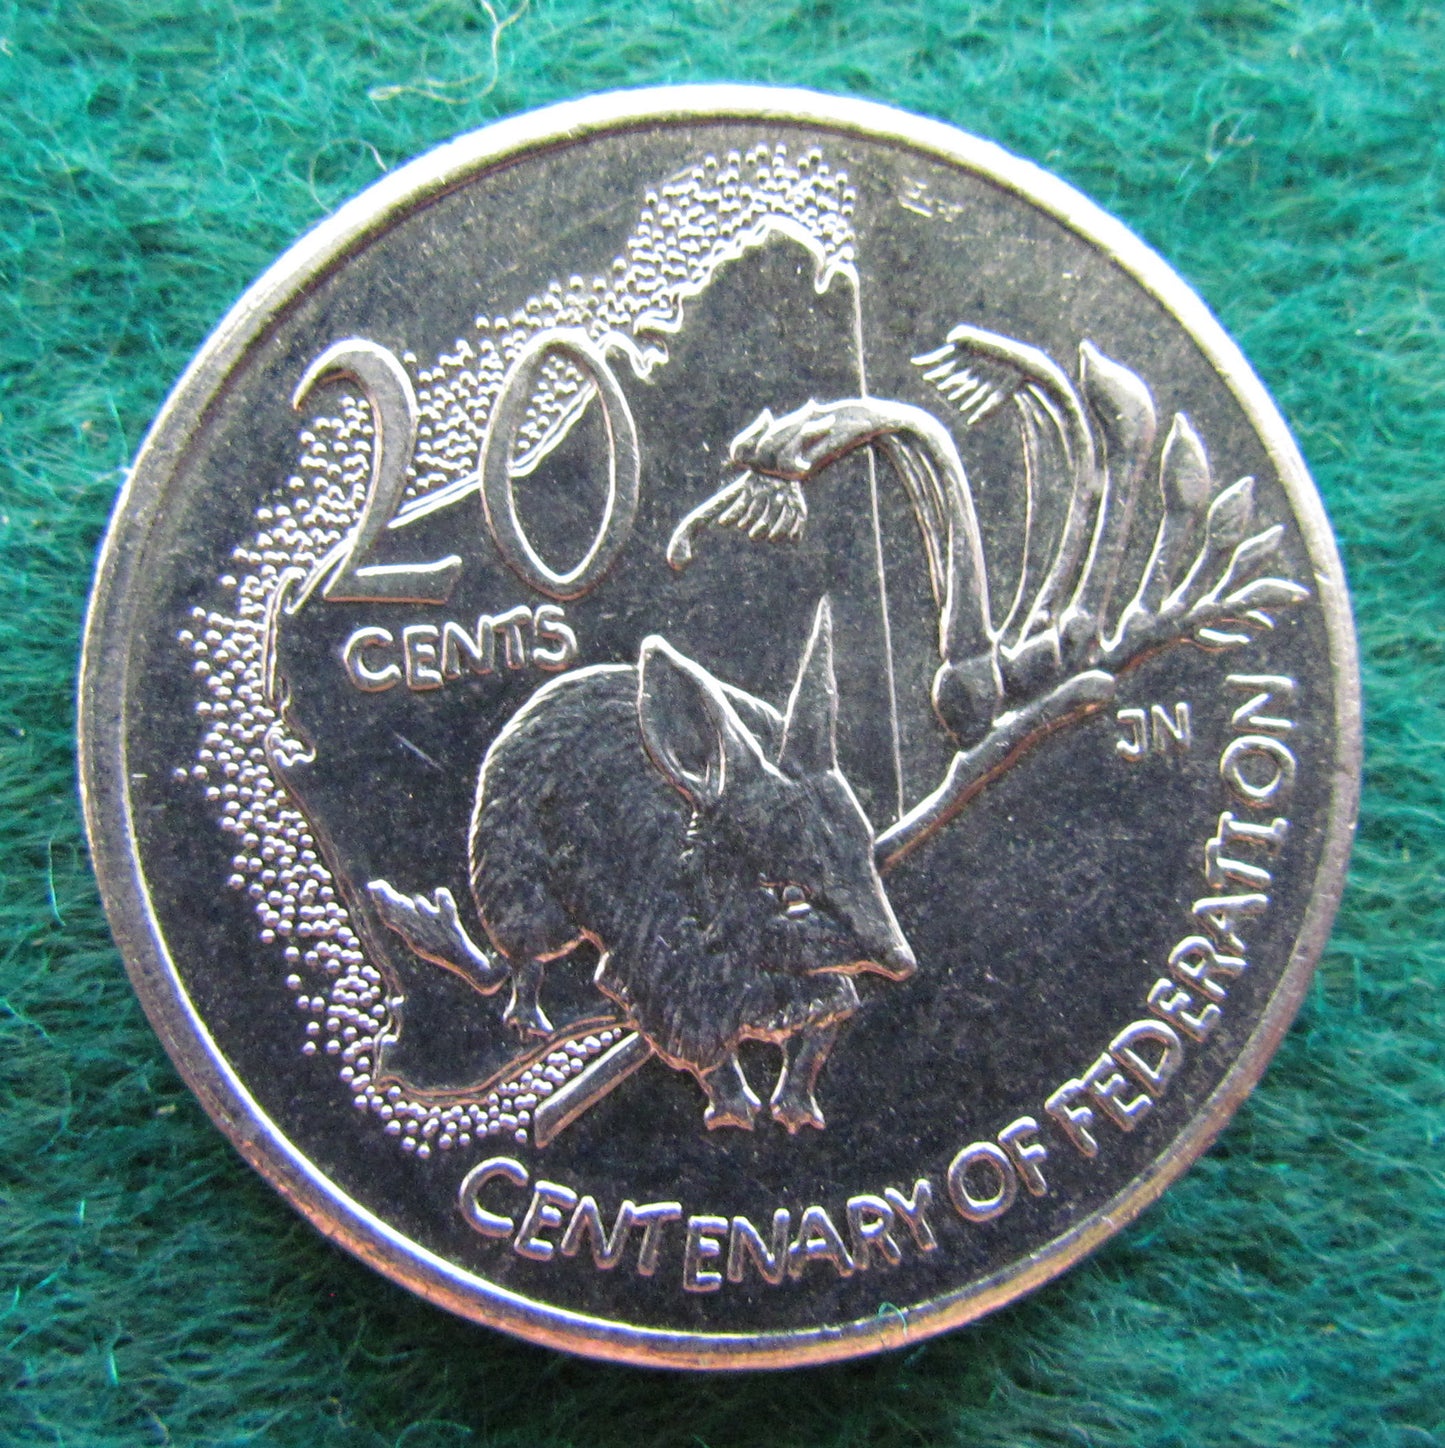 Australian 2001 20 Cent Coin Centenary Of Federation Western Australia Queen Elizabeth II Coin - Circulated